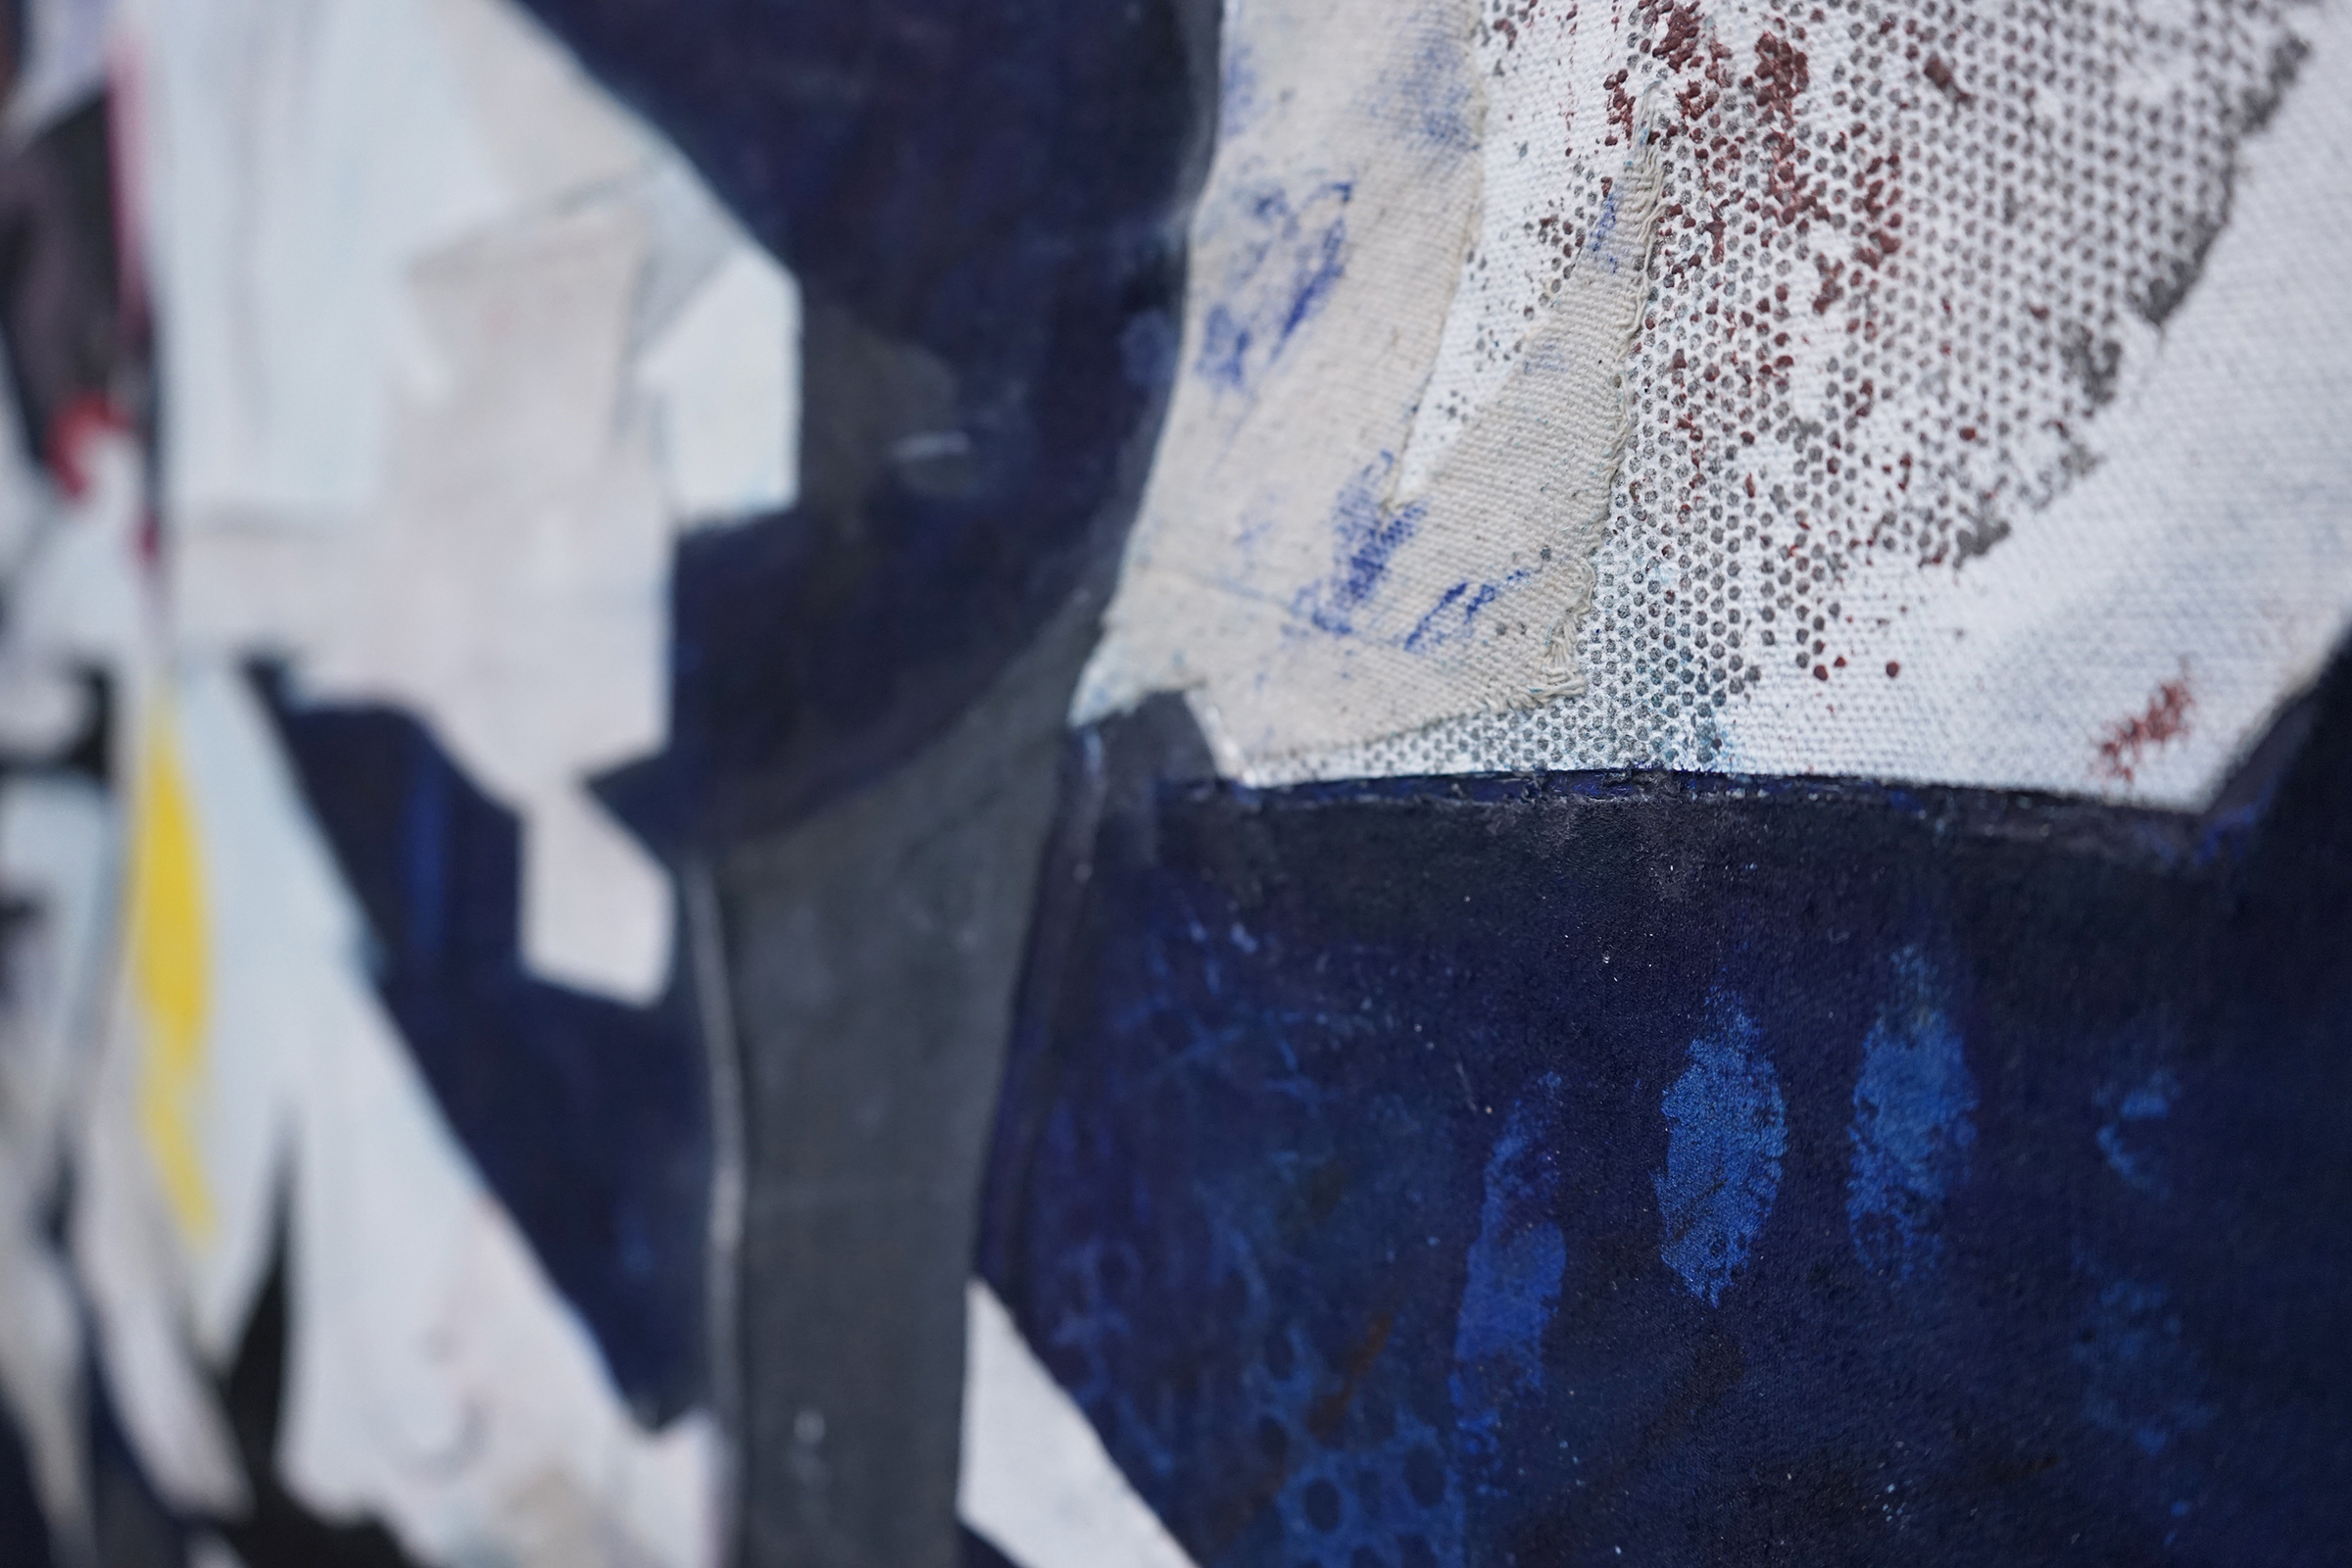   RYAN WALLACE  (detail)&nbsp; Lenakaeia 1 , oil, enamel, acrylic, pigment, cold wax, canvas, linen, rubber, aluminum, fiberglass, 48" x 64", 2017 